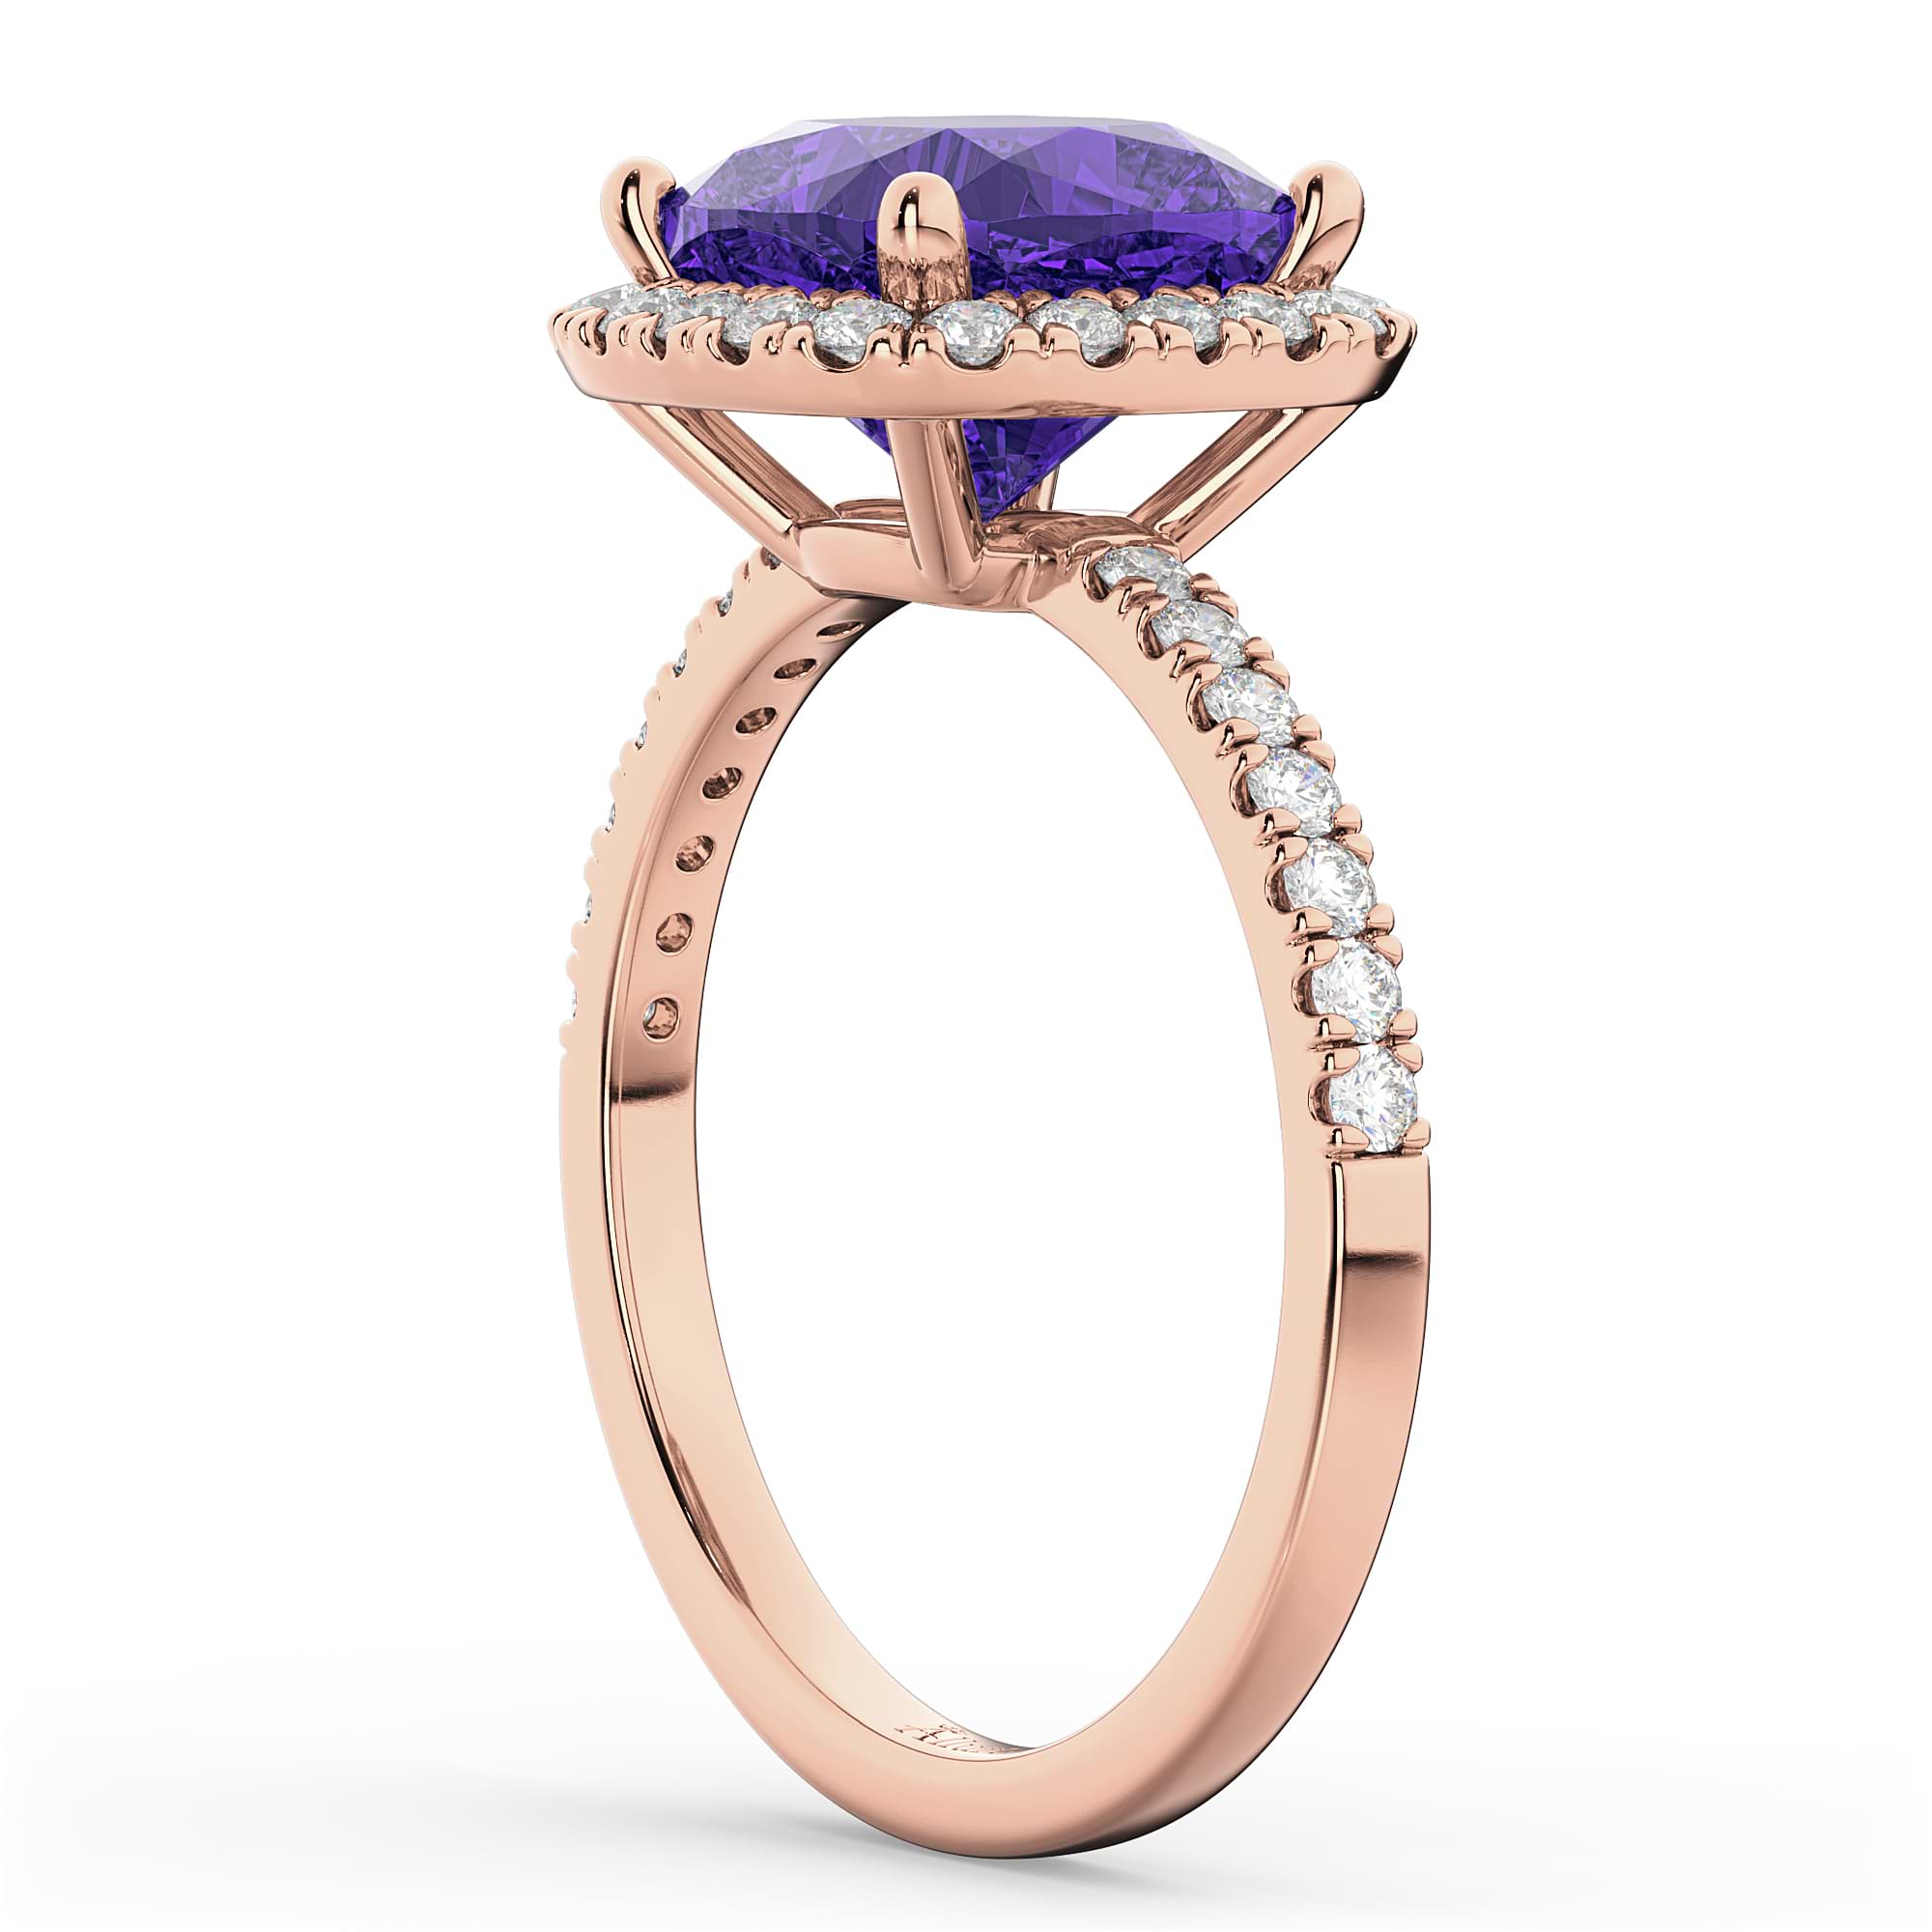 Cushion Cut Halo Tanzanite & Diamond Engagement Ring 14k Rose Gold (3.11ct)